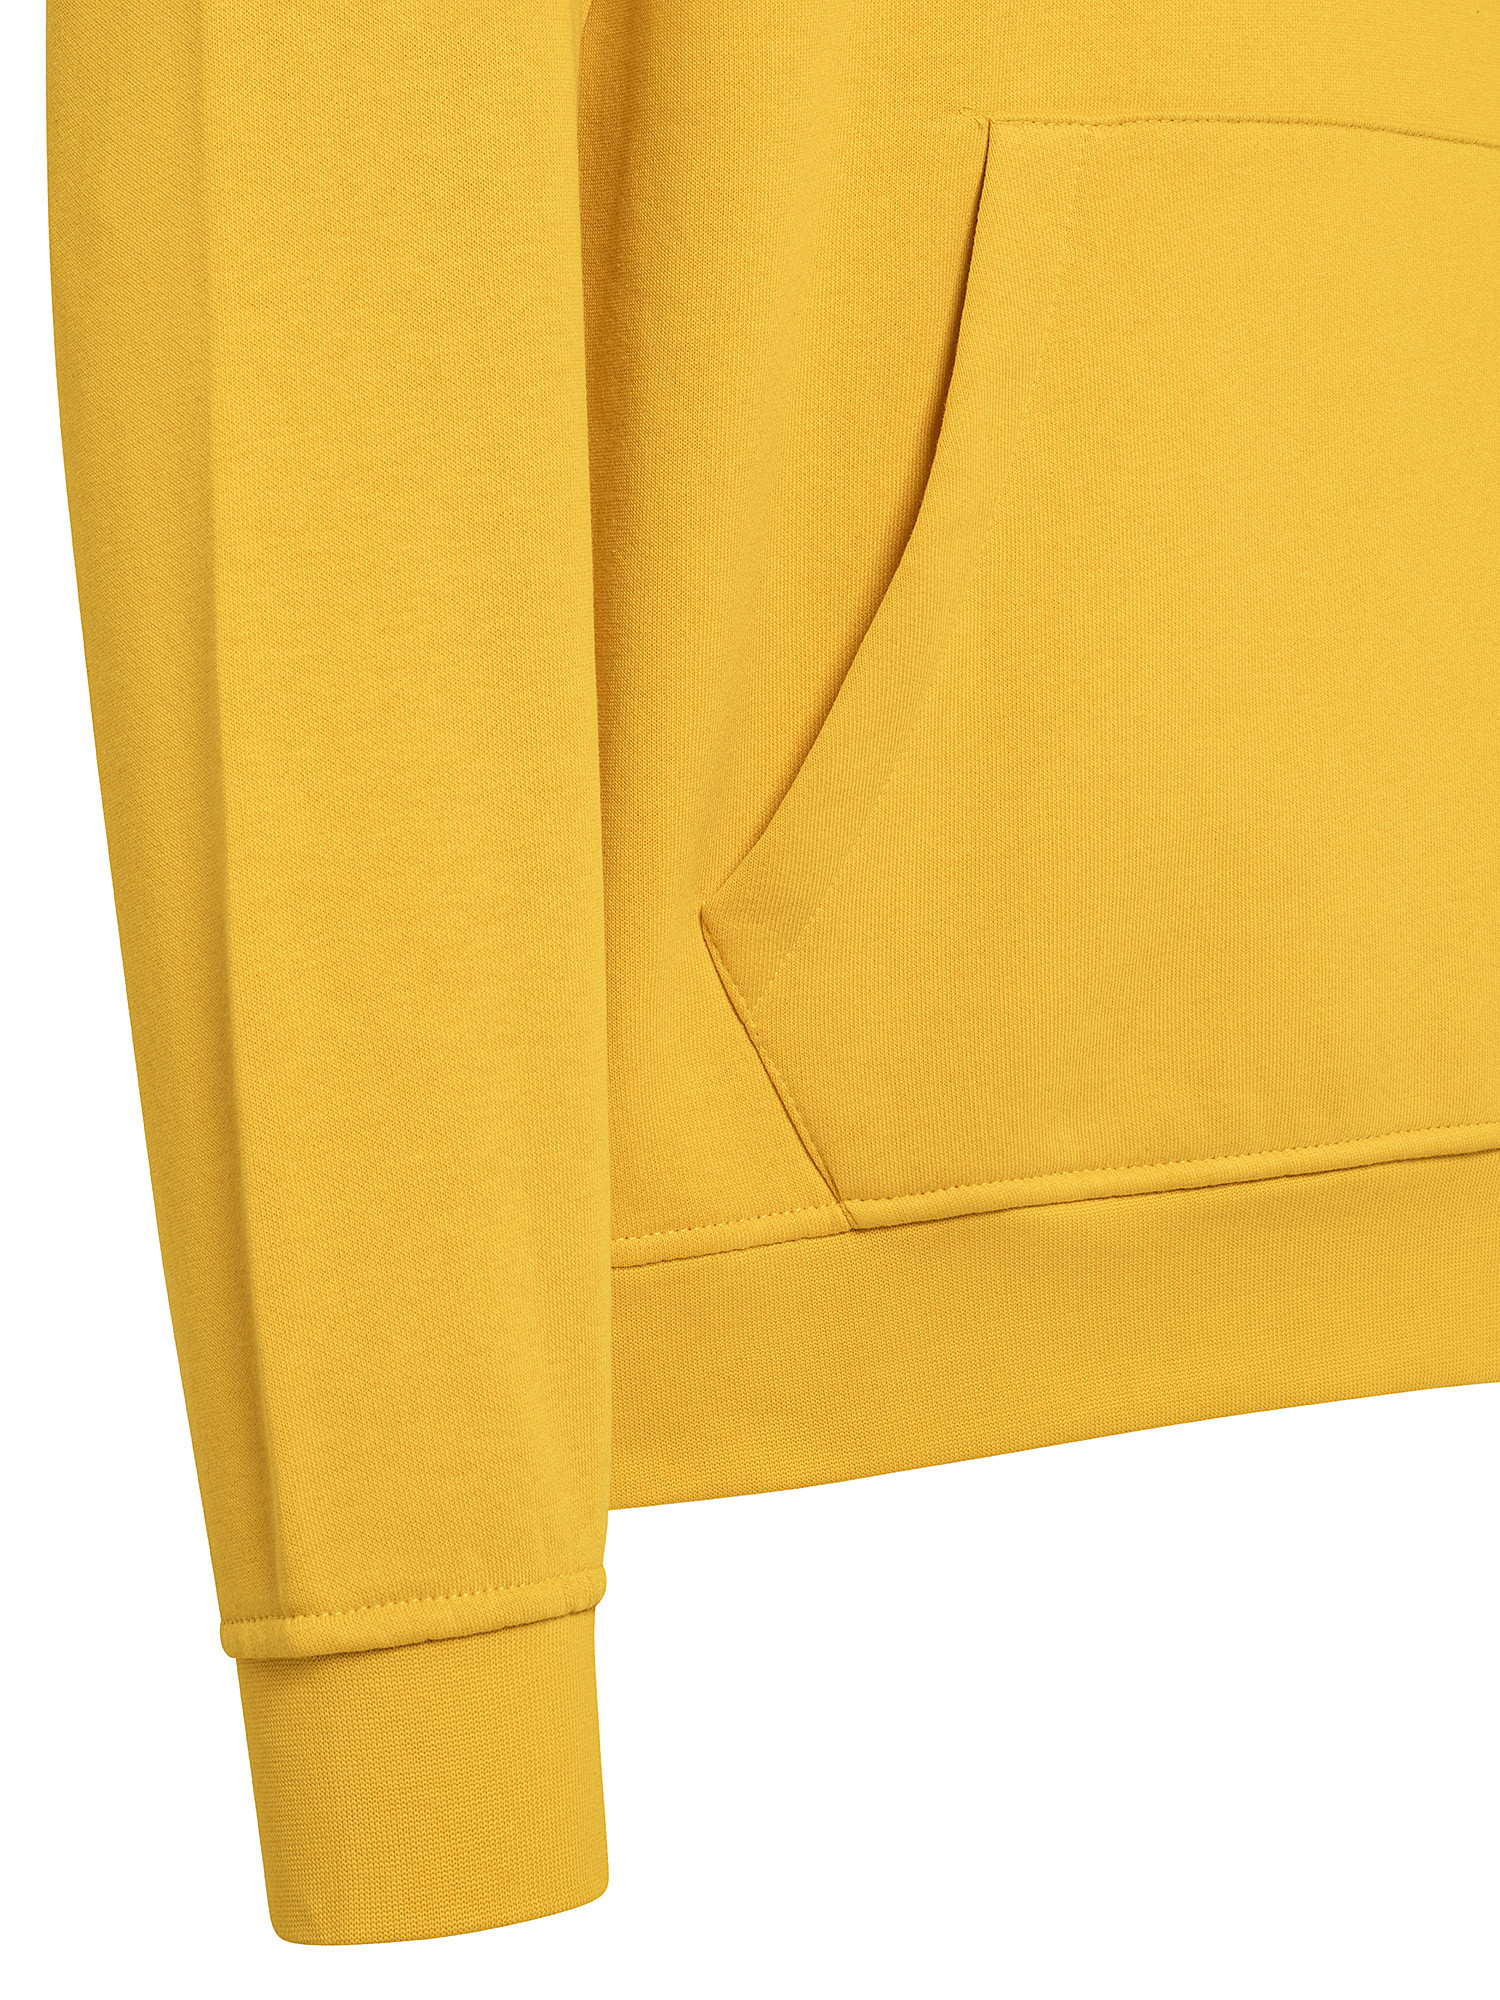 Sweatshirt with hood and long sleeves, Yellow, large image number 2